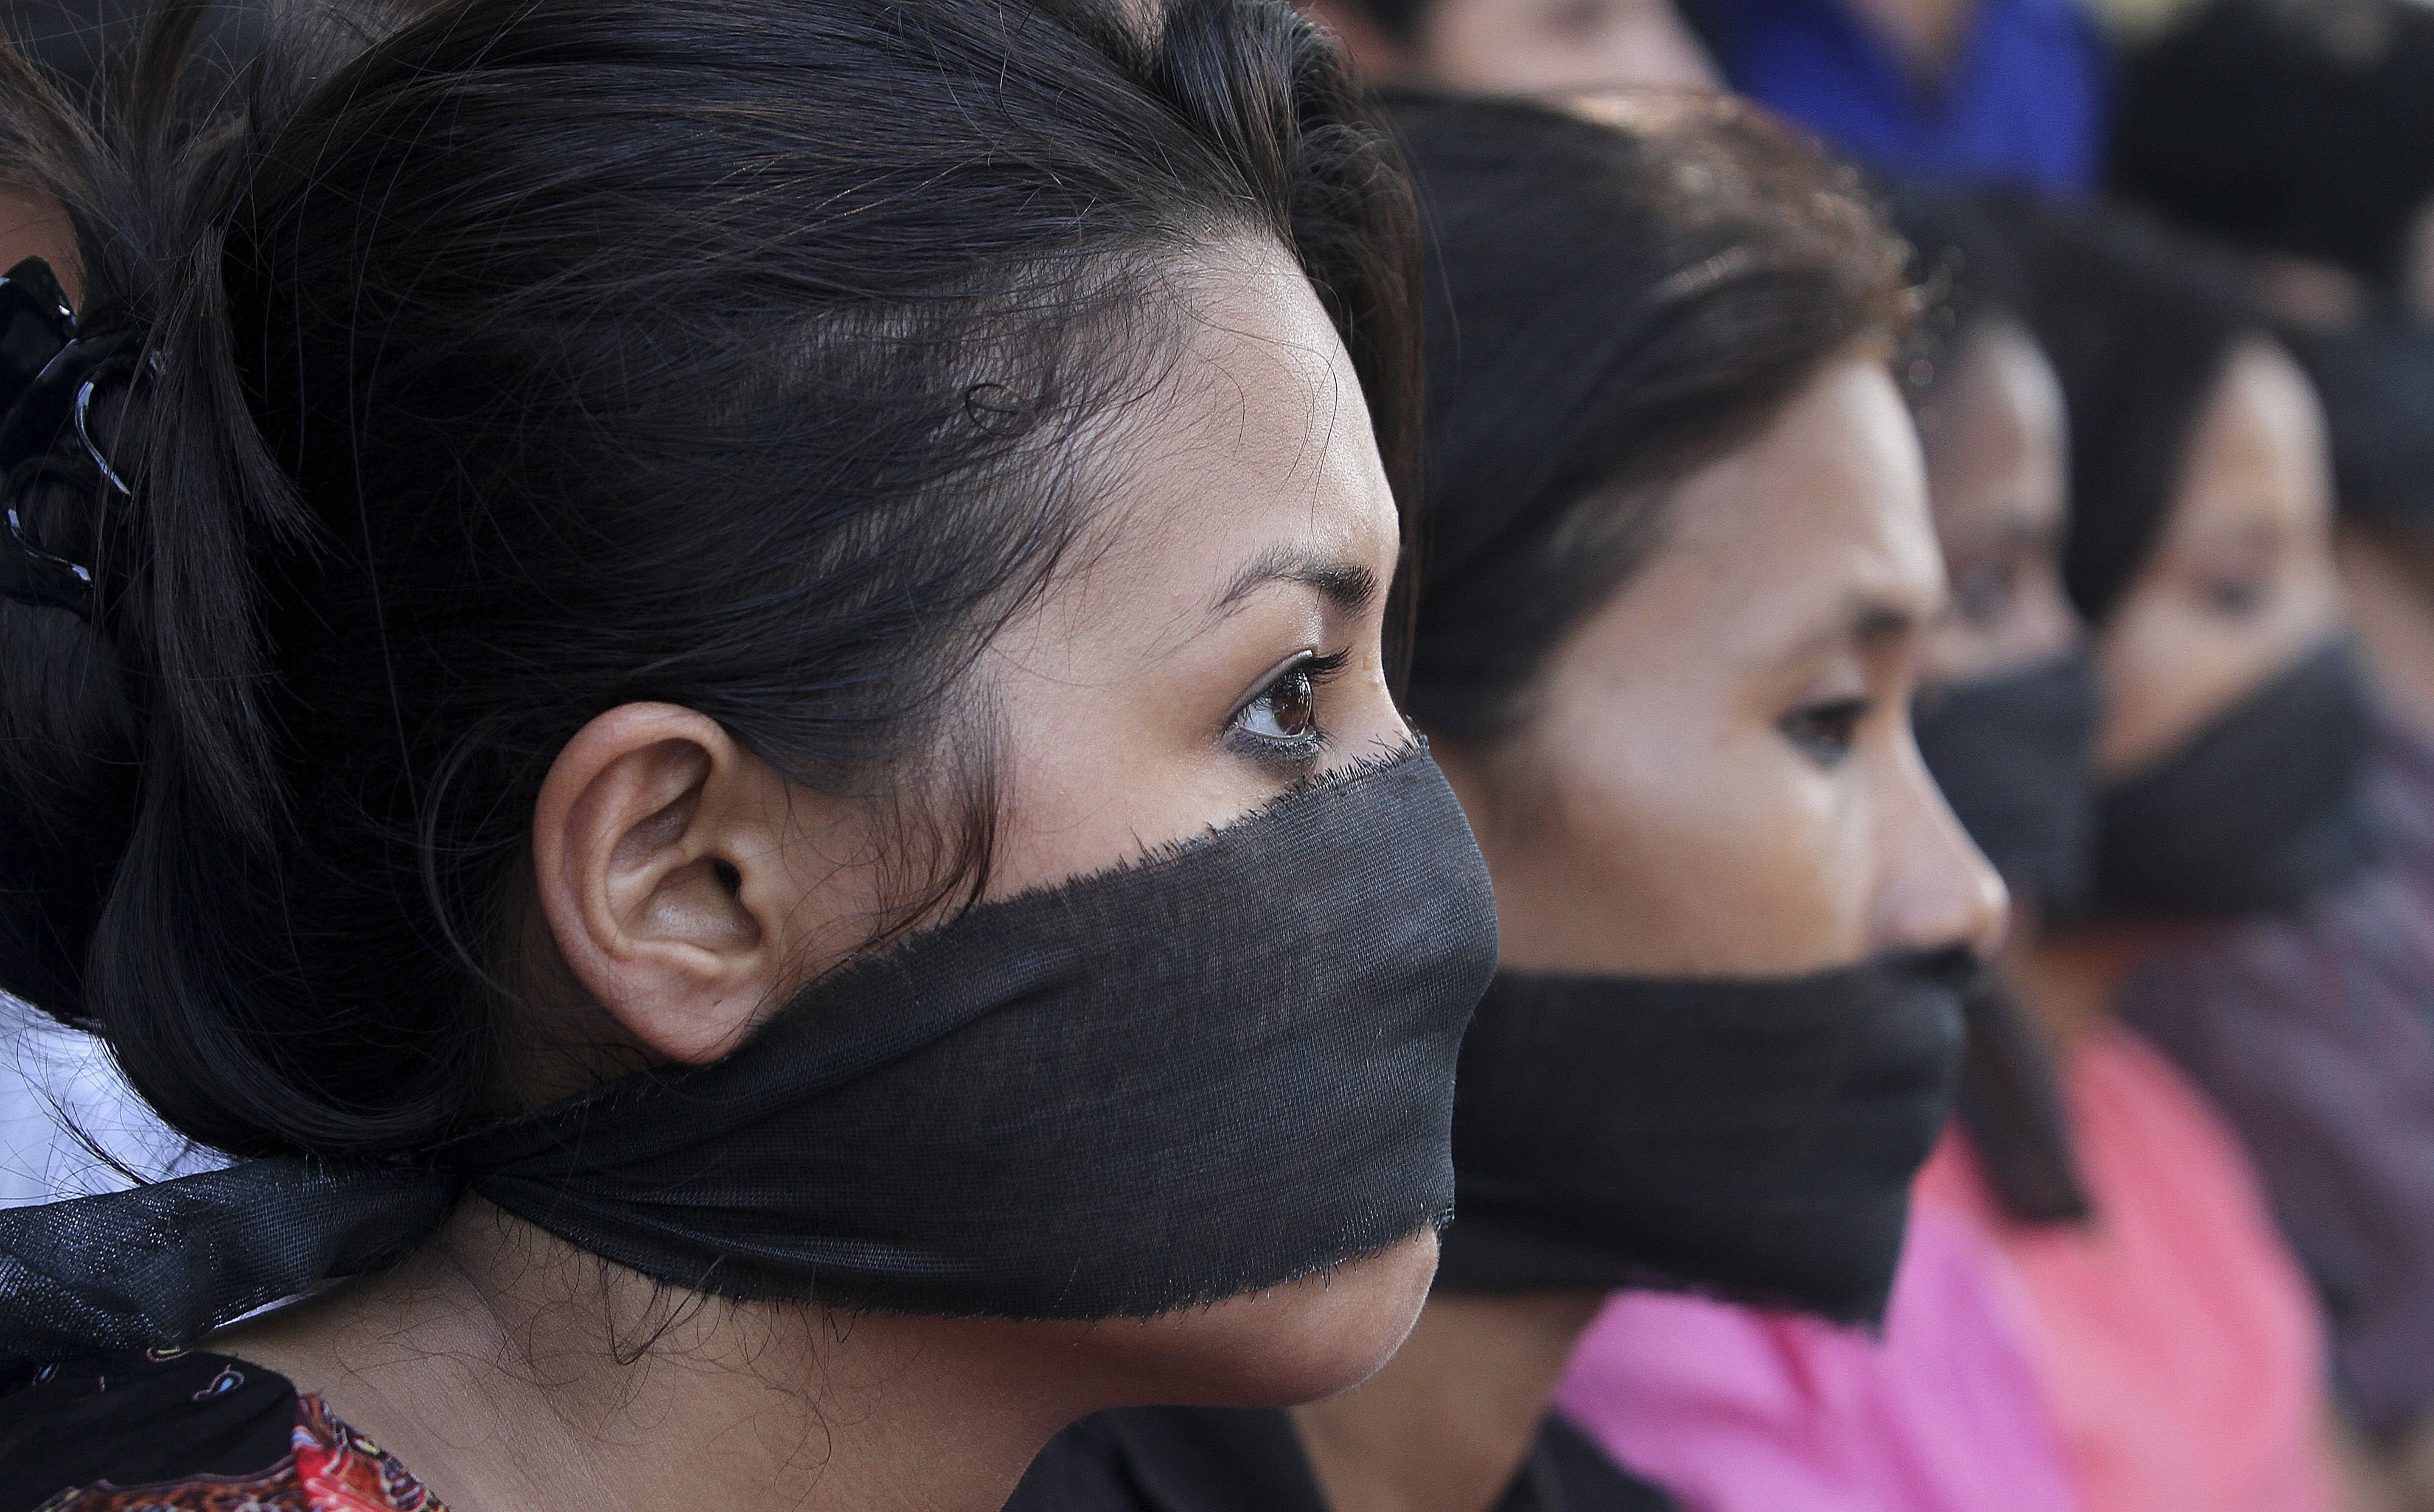 Zabardasti Rape Girls Mypornwapme Com - Despite reforms, sexual assault survivors face systemic barriers in India |  CNN